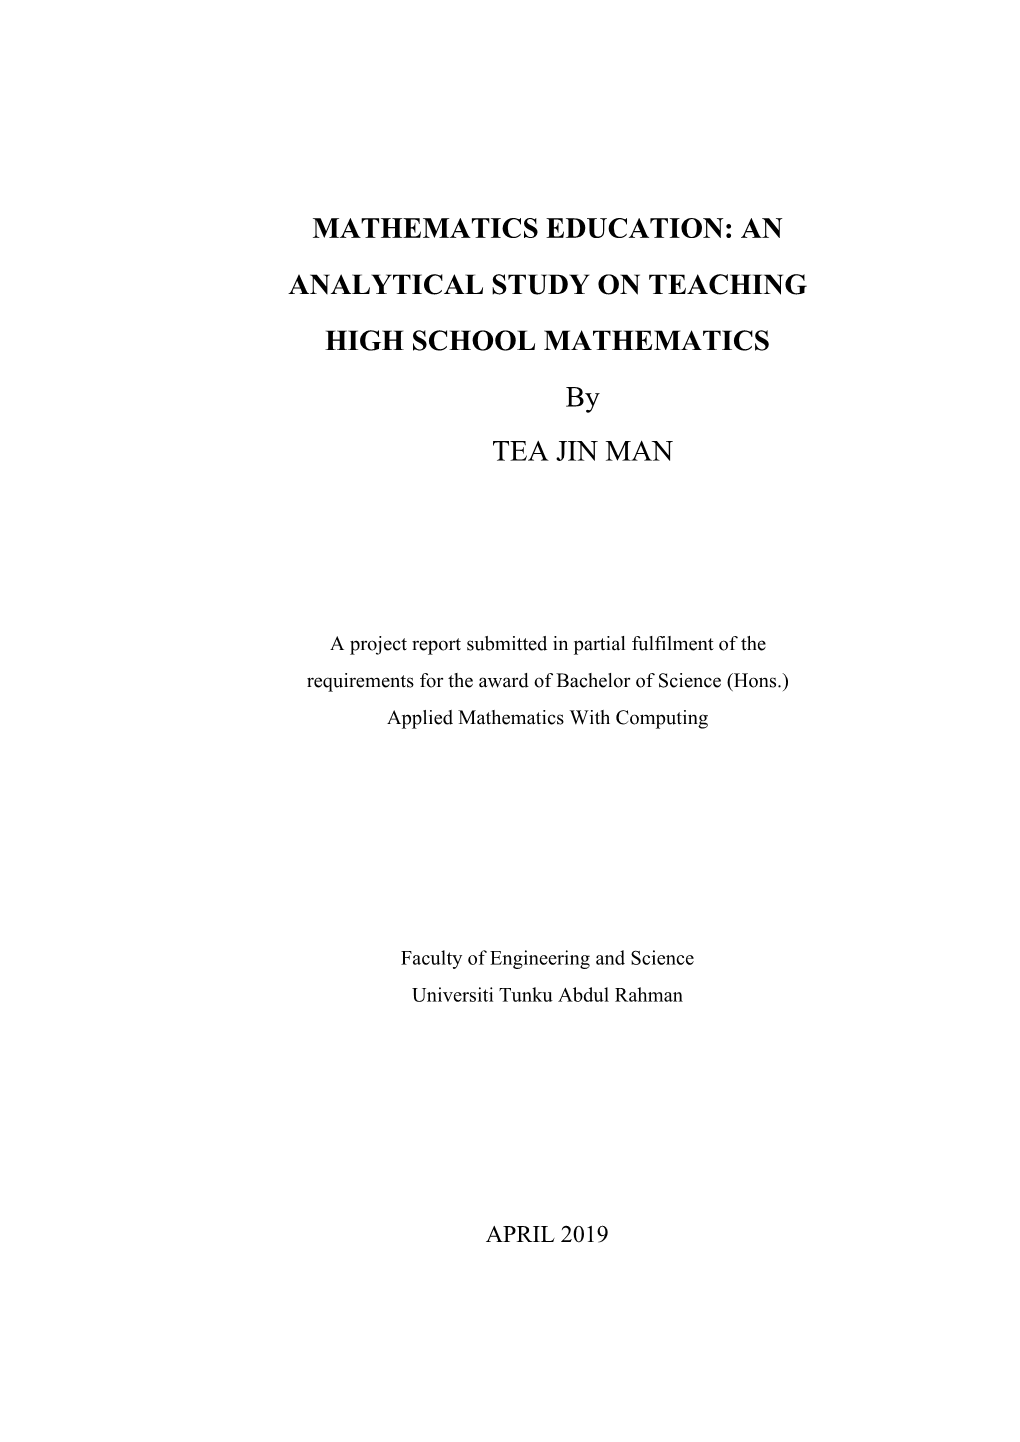 AN ANALYTICAL STUDY on TEACHING HIGH SCHOOL MATHEMATICS by TEA JIN MAN